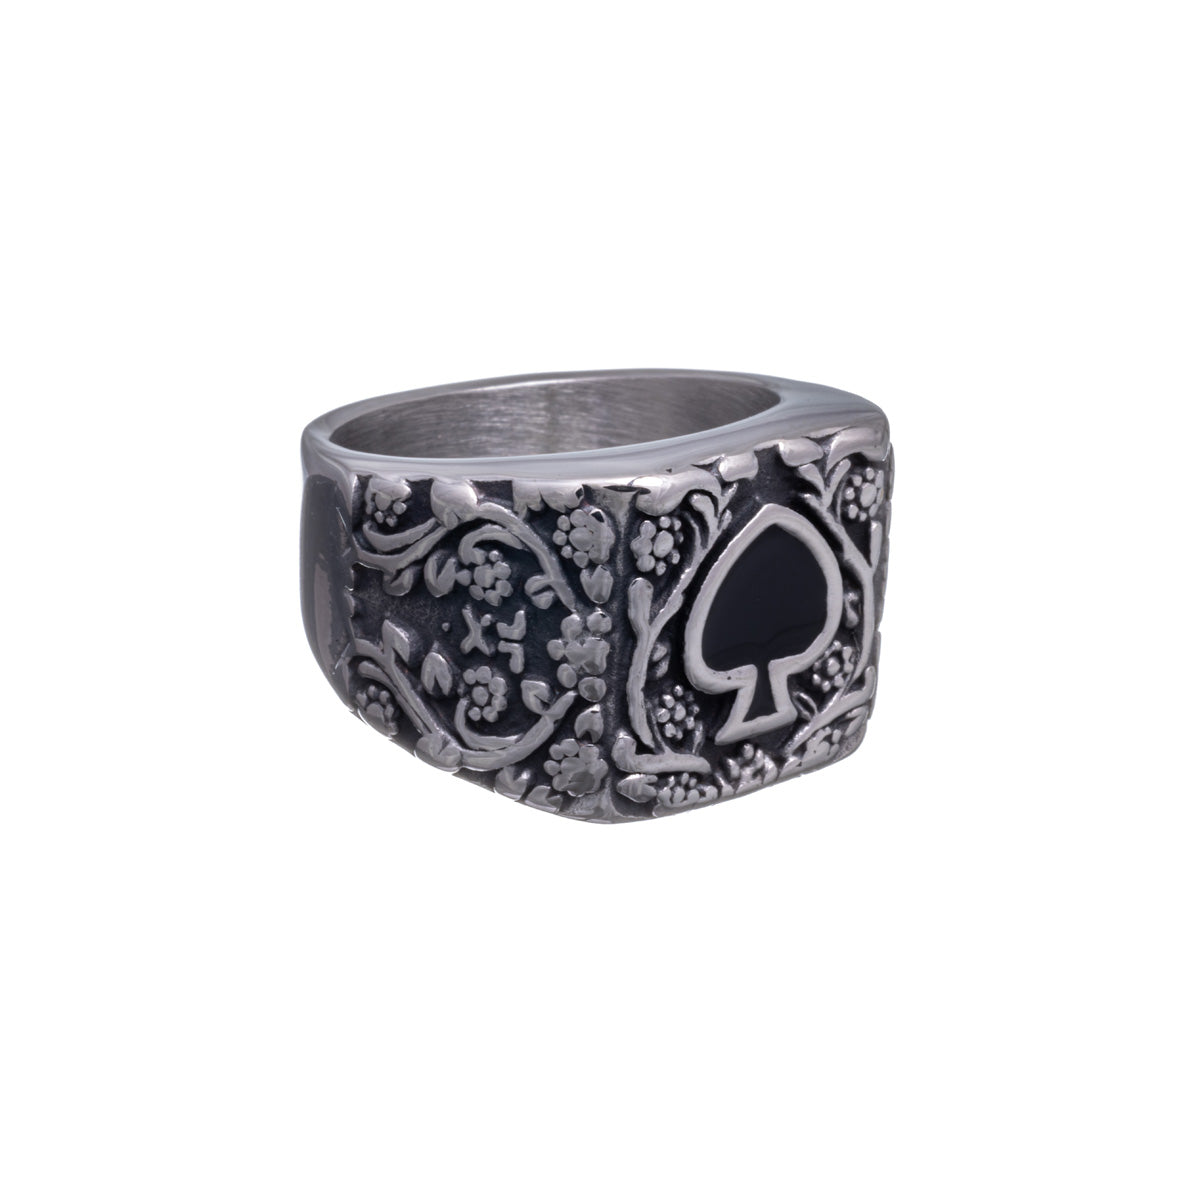 Ace of spades wedding ring steel ring (Steel 316L)